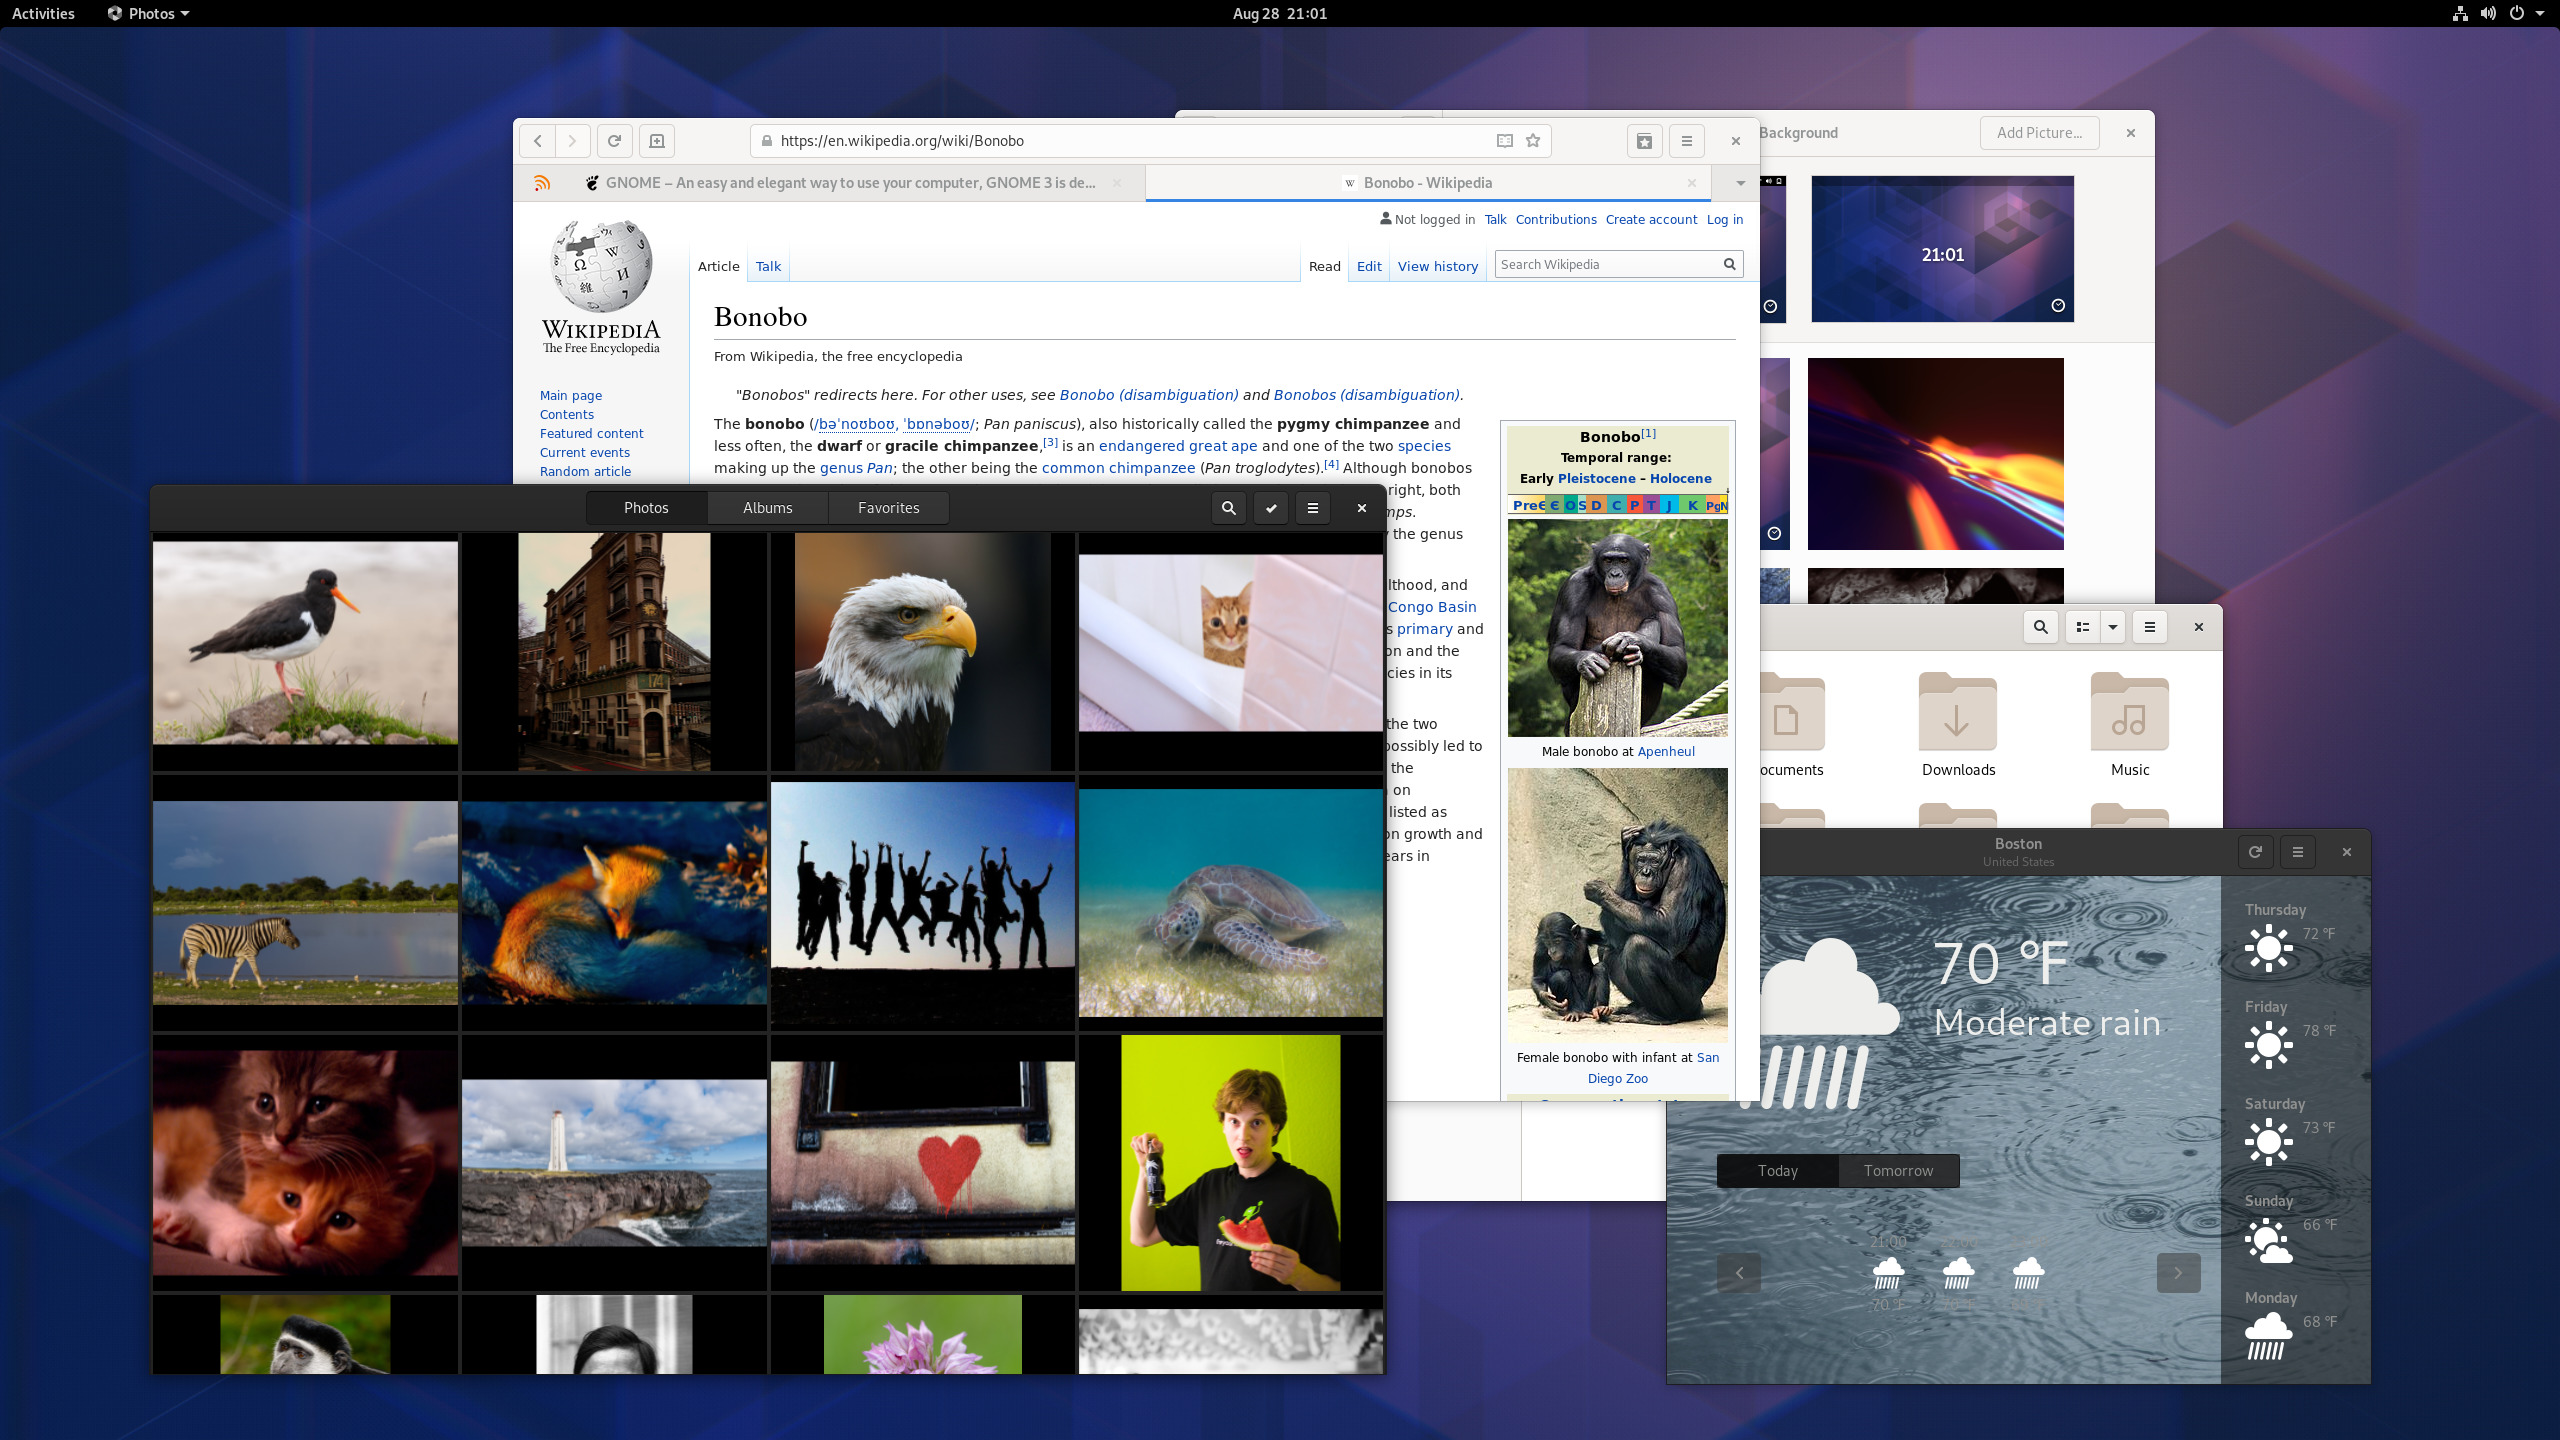 A preview of GNOME 3.34 Desktop